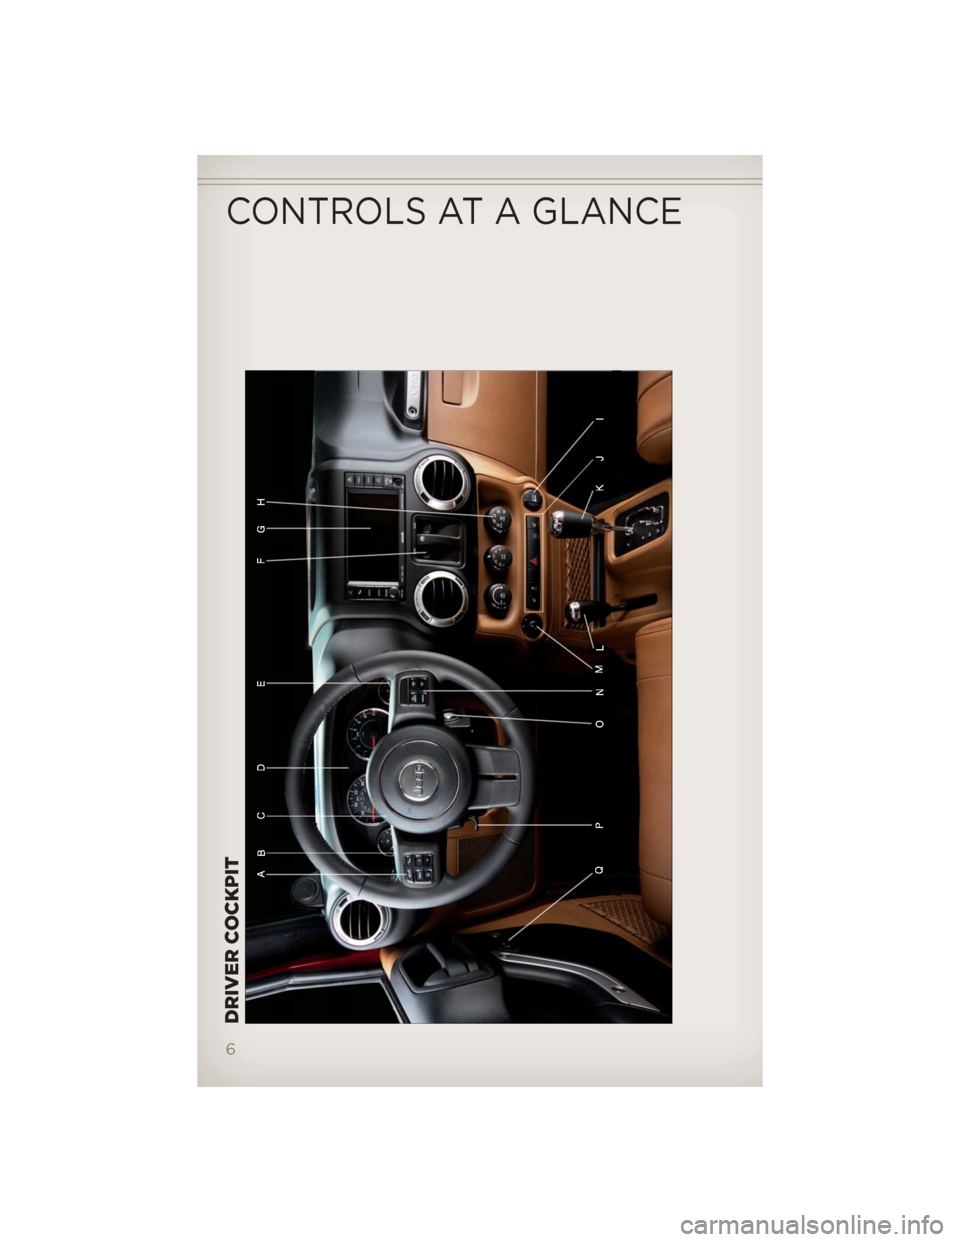 JEEP WRANGLER 2012 JK / 3.G User Guide DRIVER COCKPIT
CONTROLS AT A GLANCE
6 